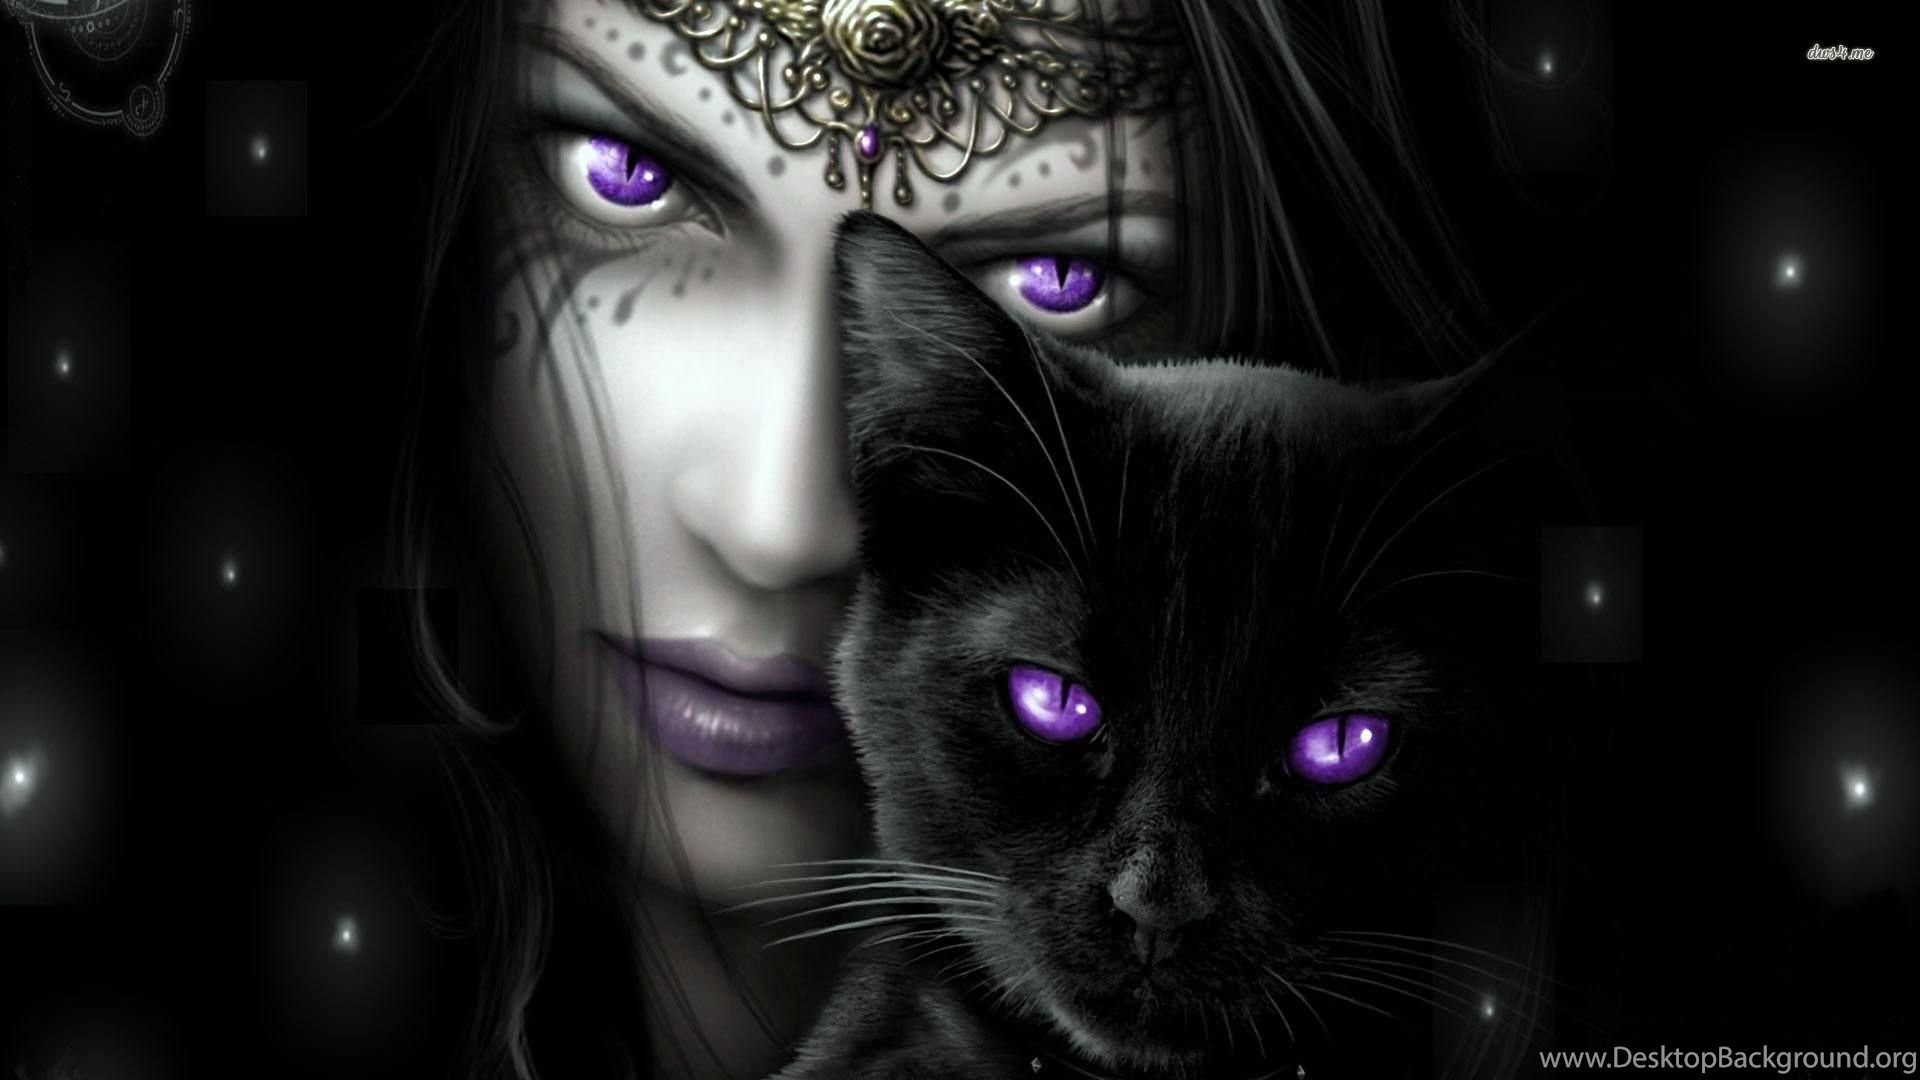 Purple Eyed Woman With Her Black Cat .desktopbackground.org